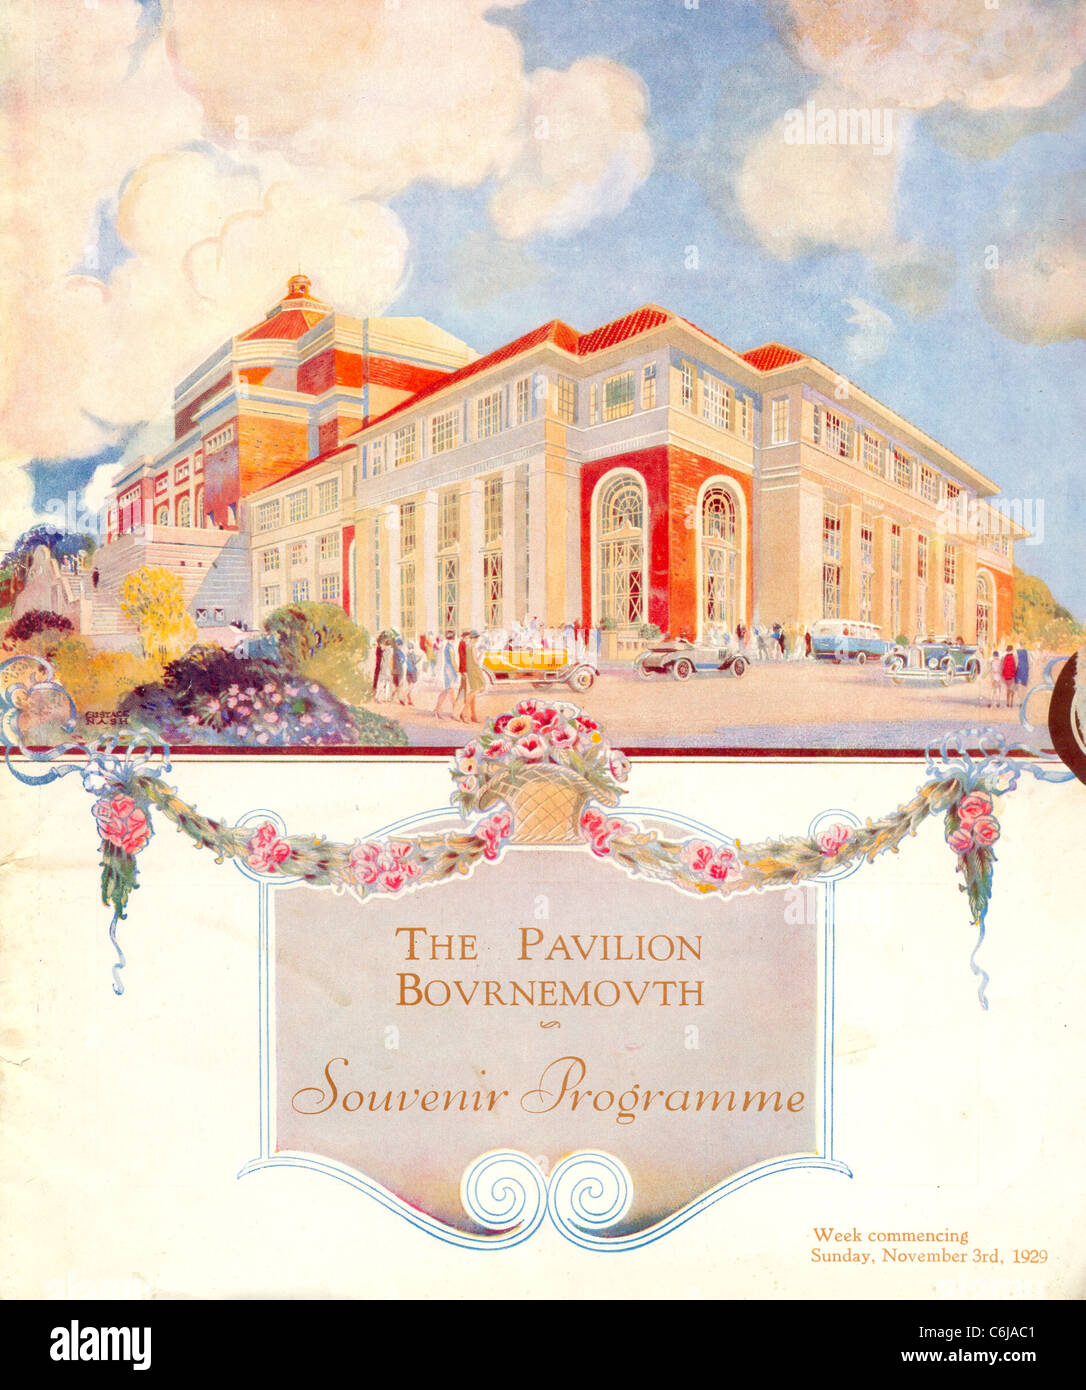 Souvenir-Programm für The Pavilion, Bournemouth Stockfoto